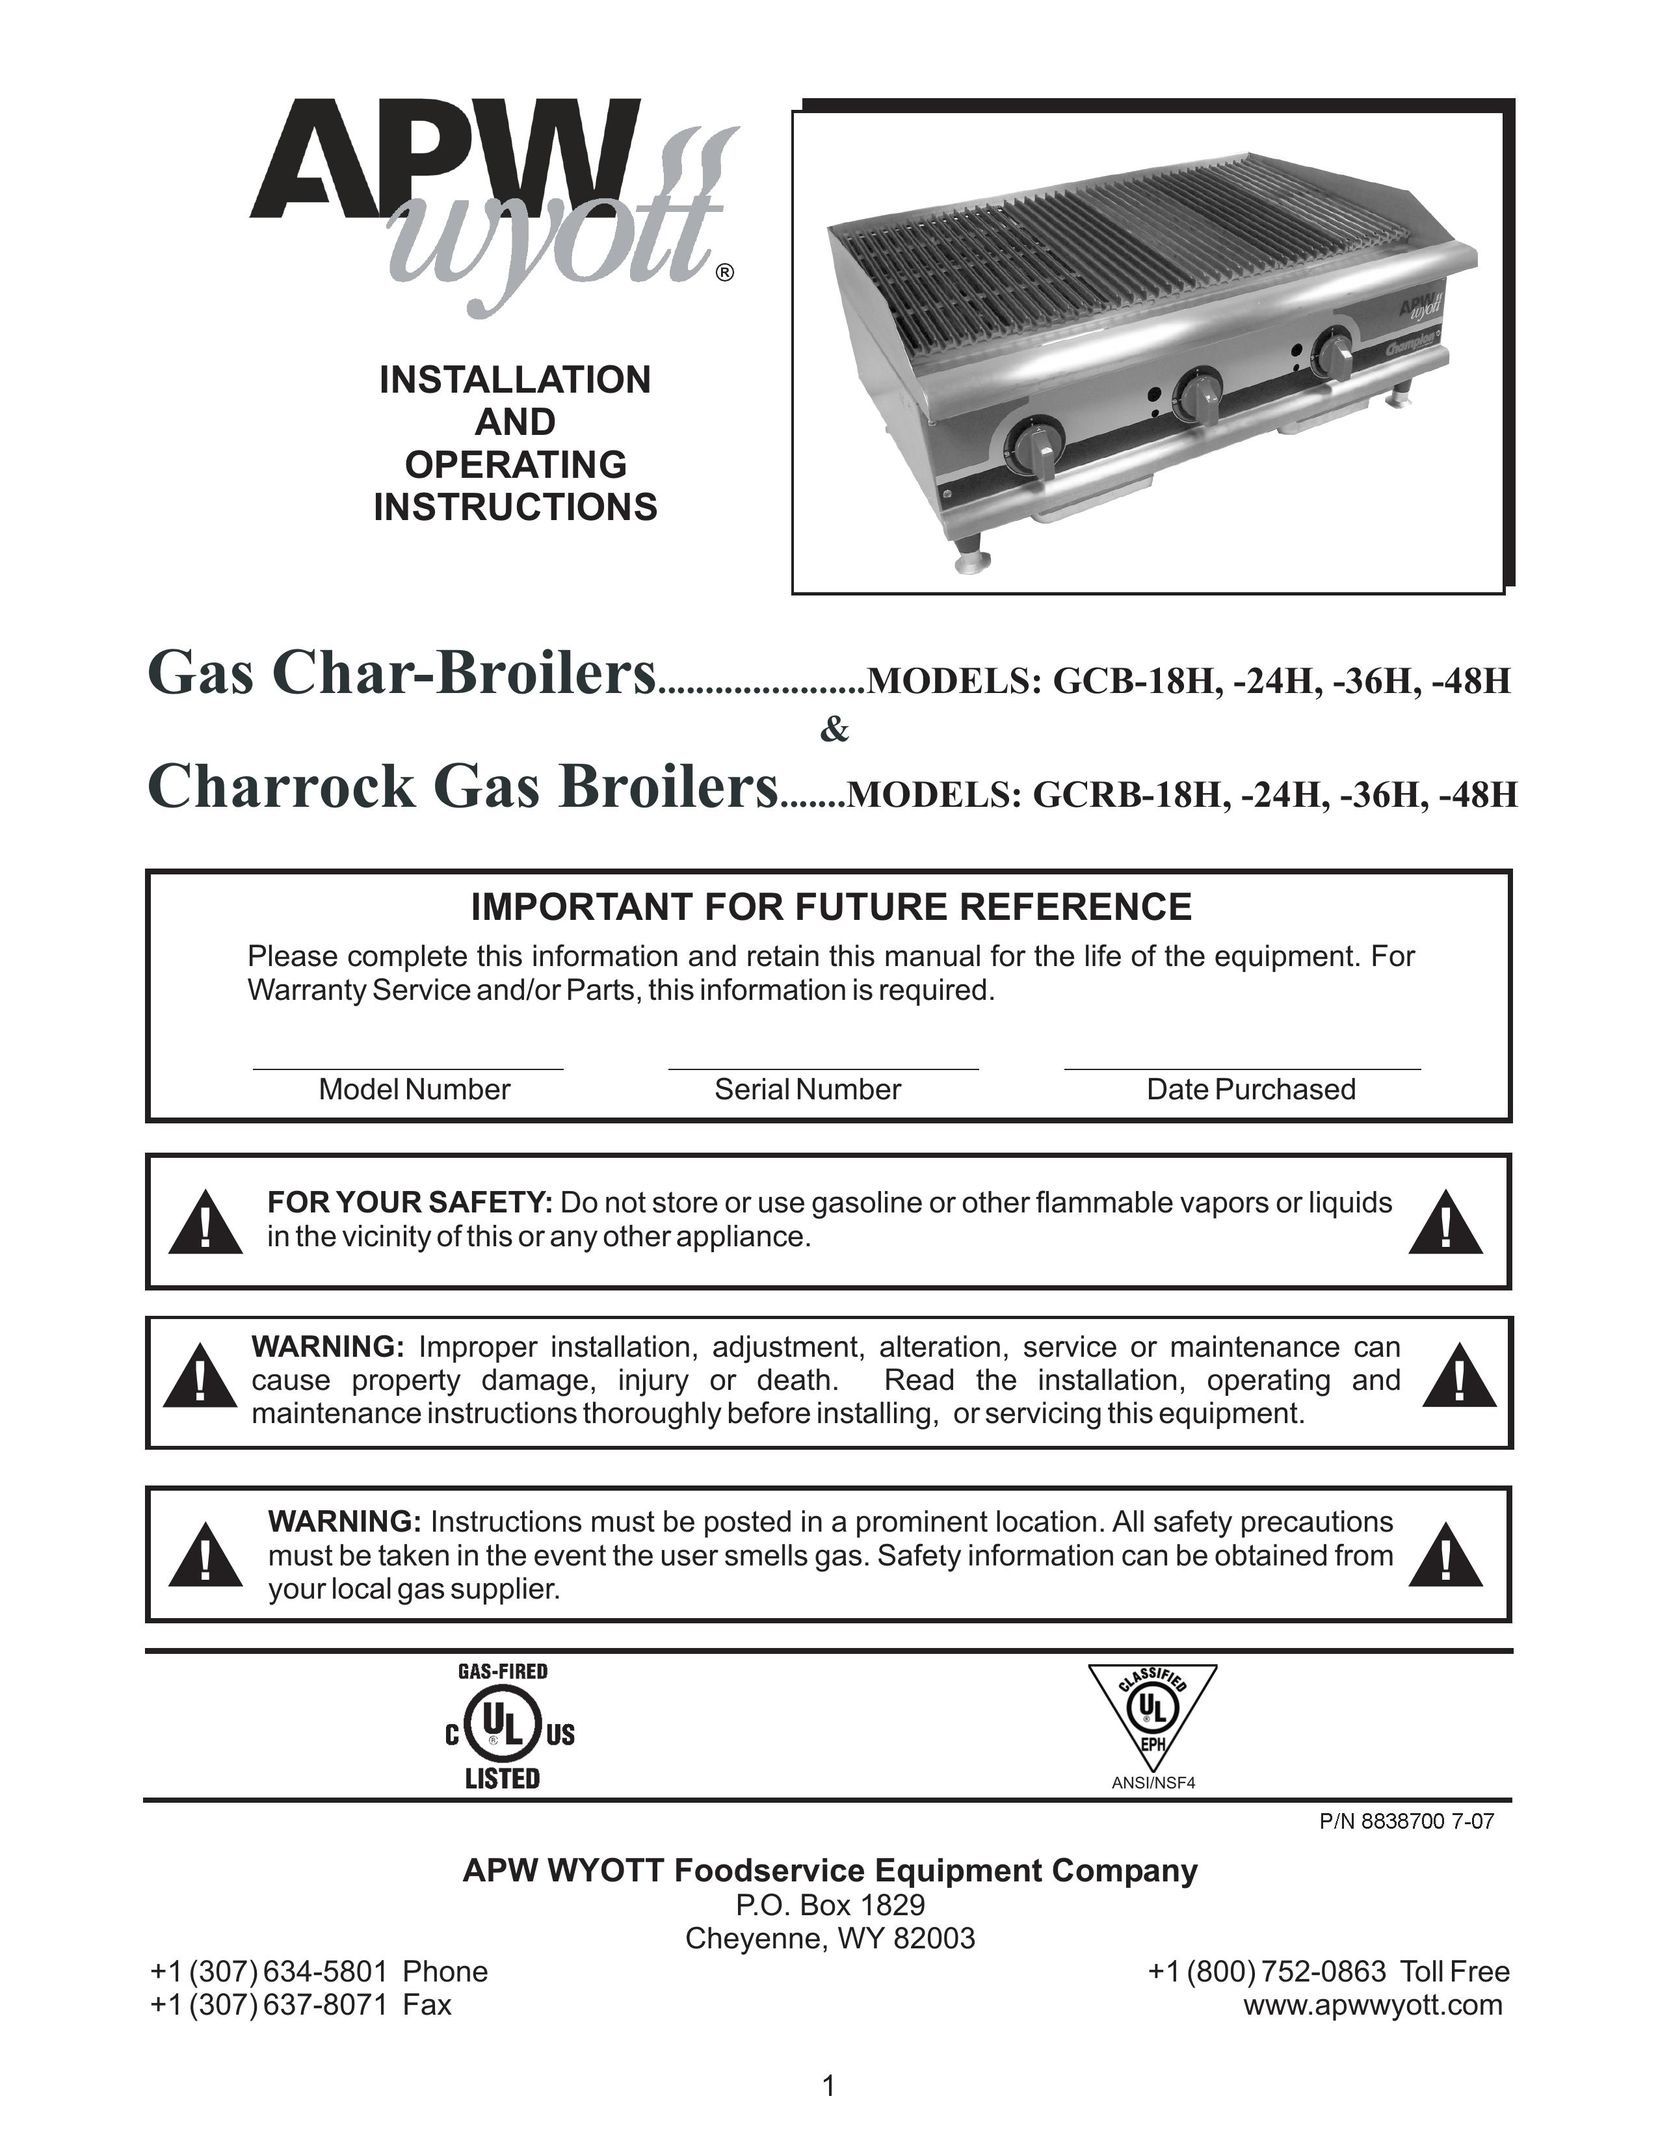 APW Wyott GCB-36H Oven User Manual